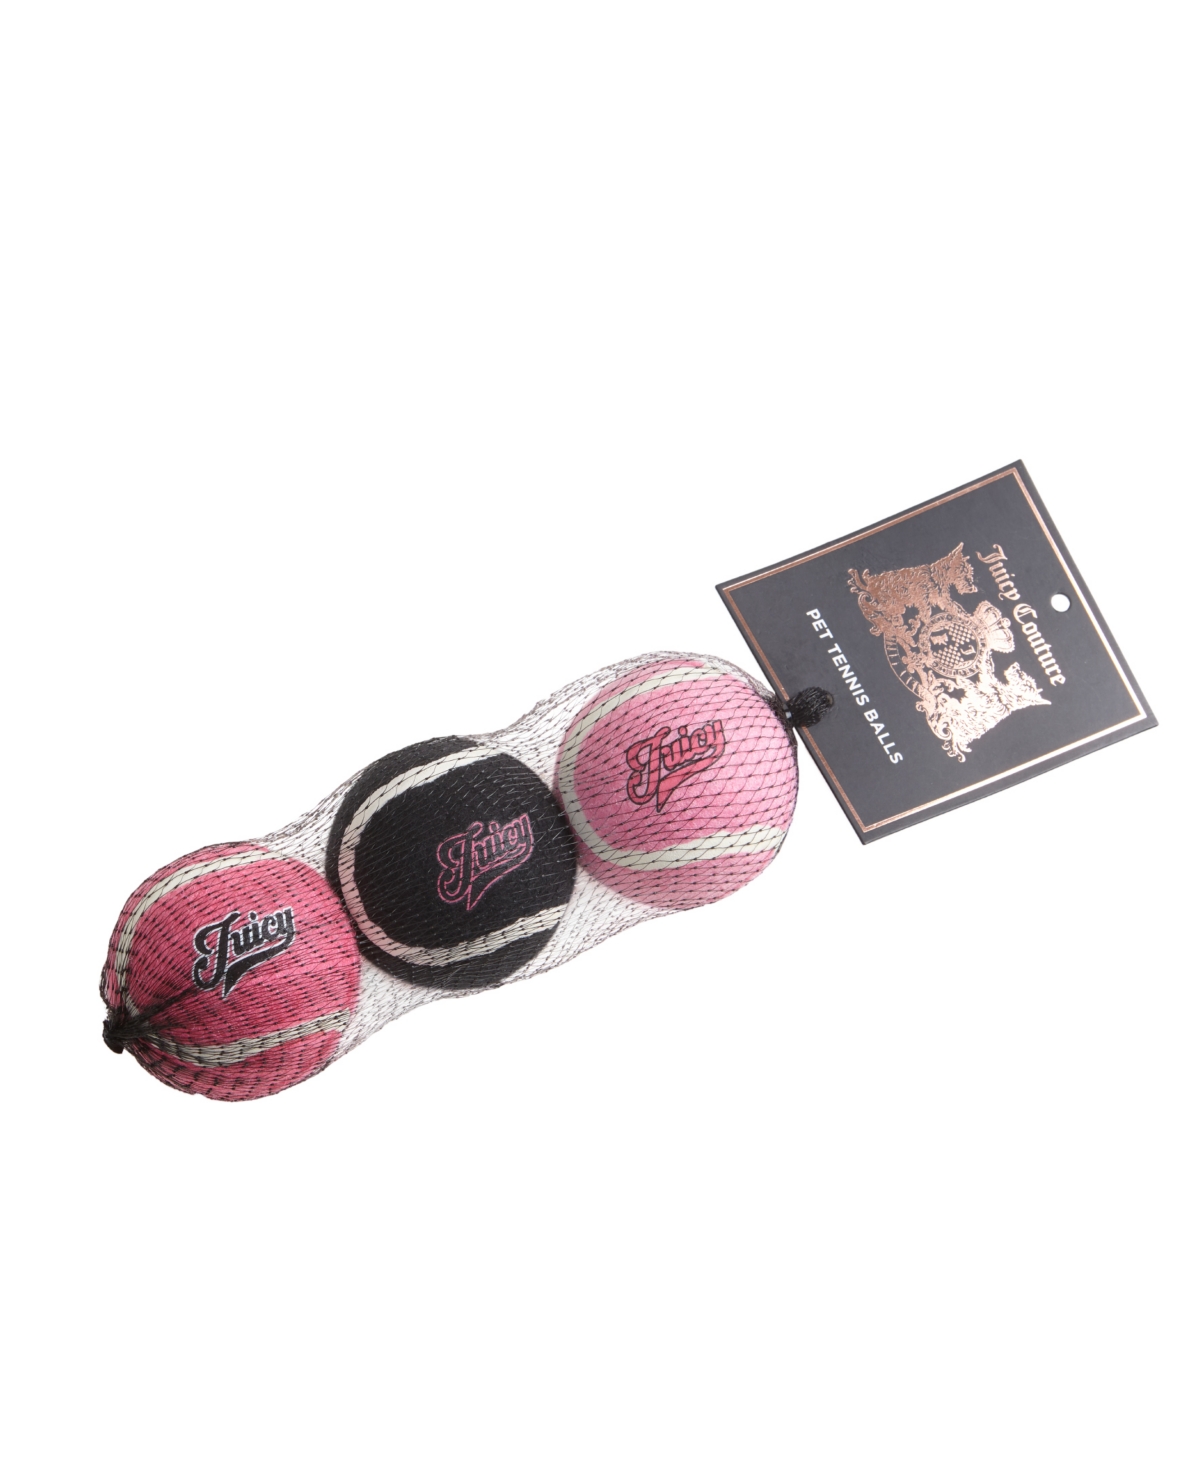 Tennis Balls for Dogs 2.5" Durable Tennis Balls, Set of 3 - Pink